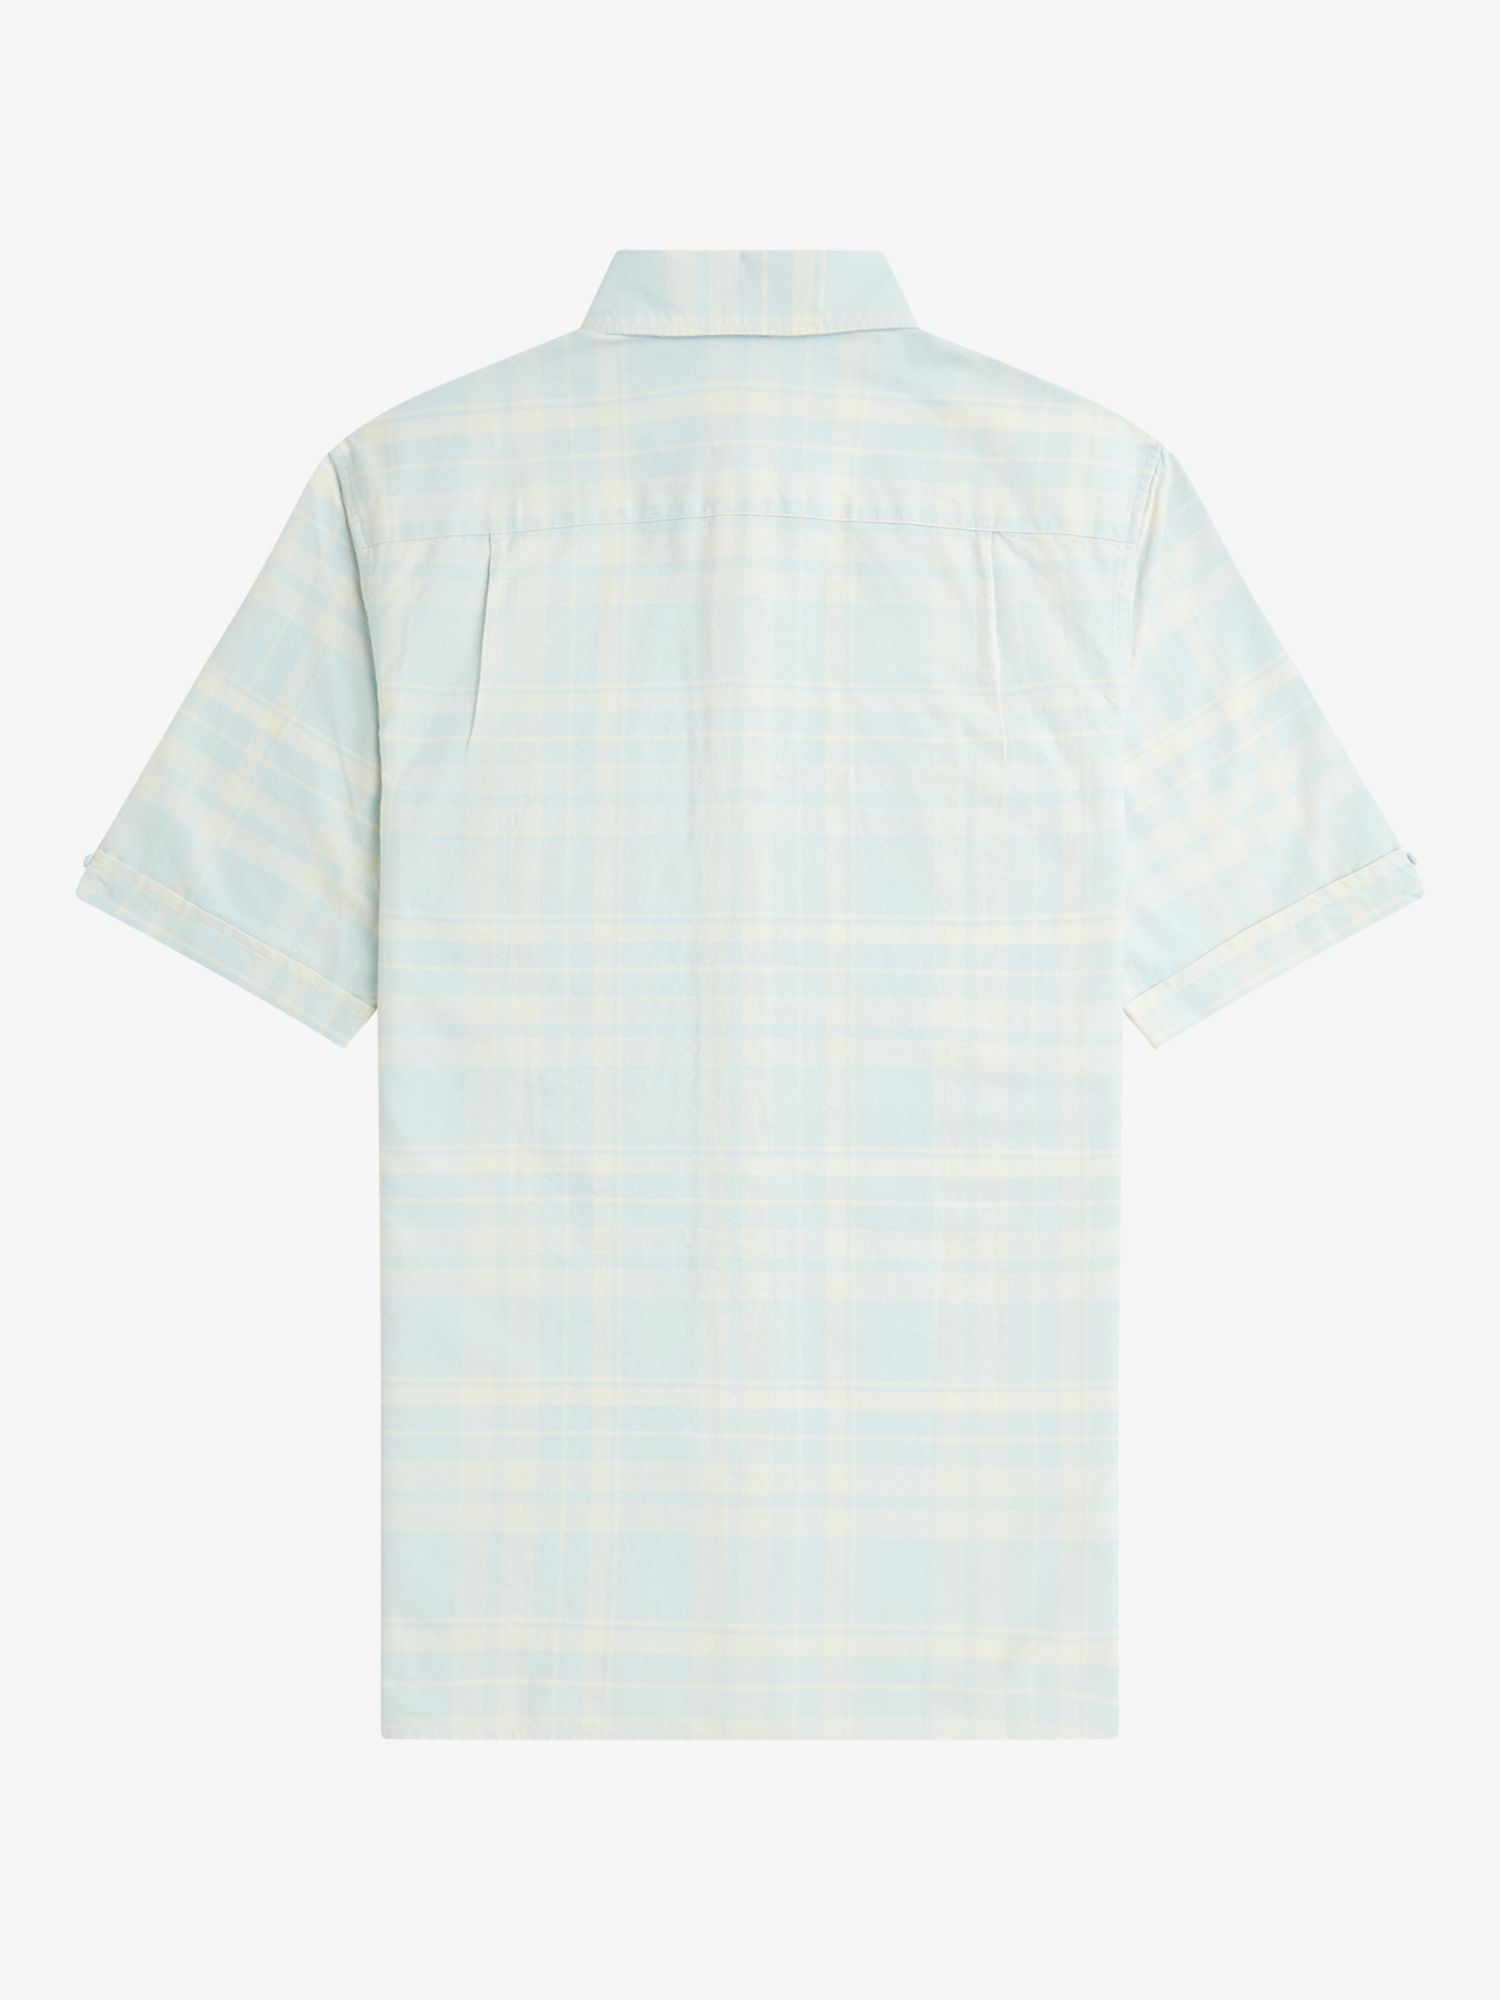 Fred Perry Short Sleeve Tartan Shirt, Blue, S